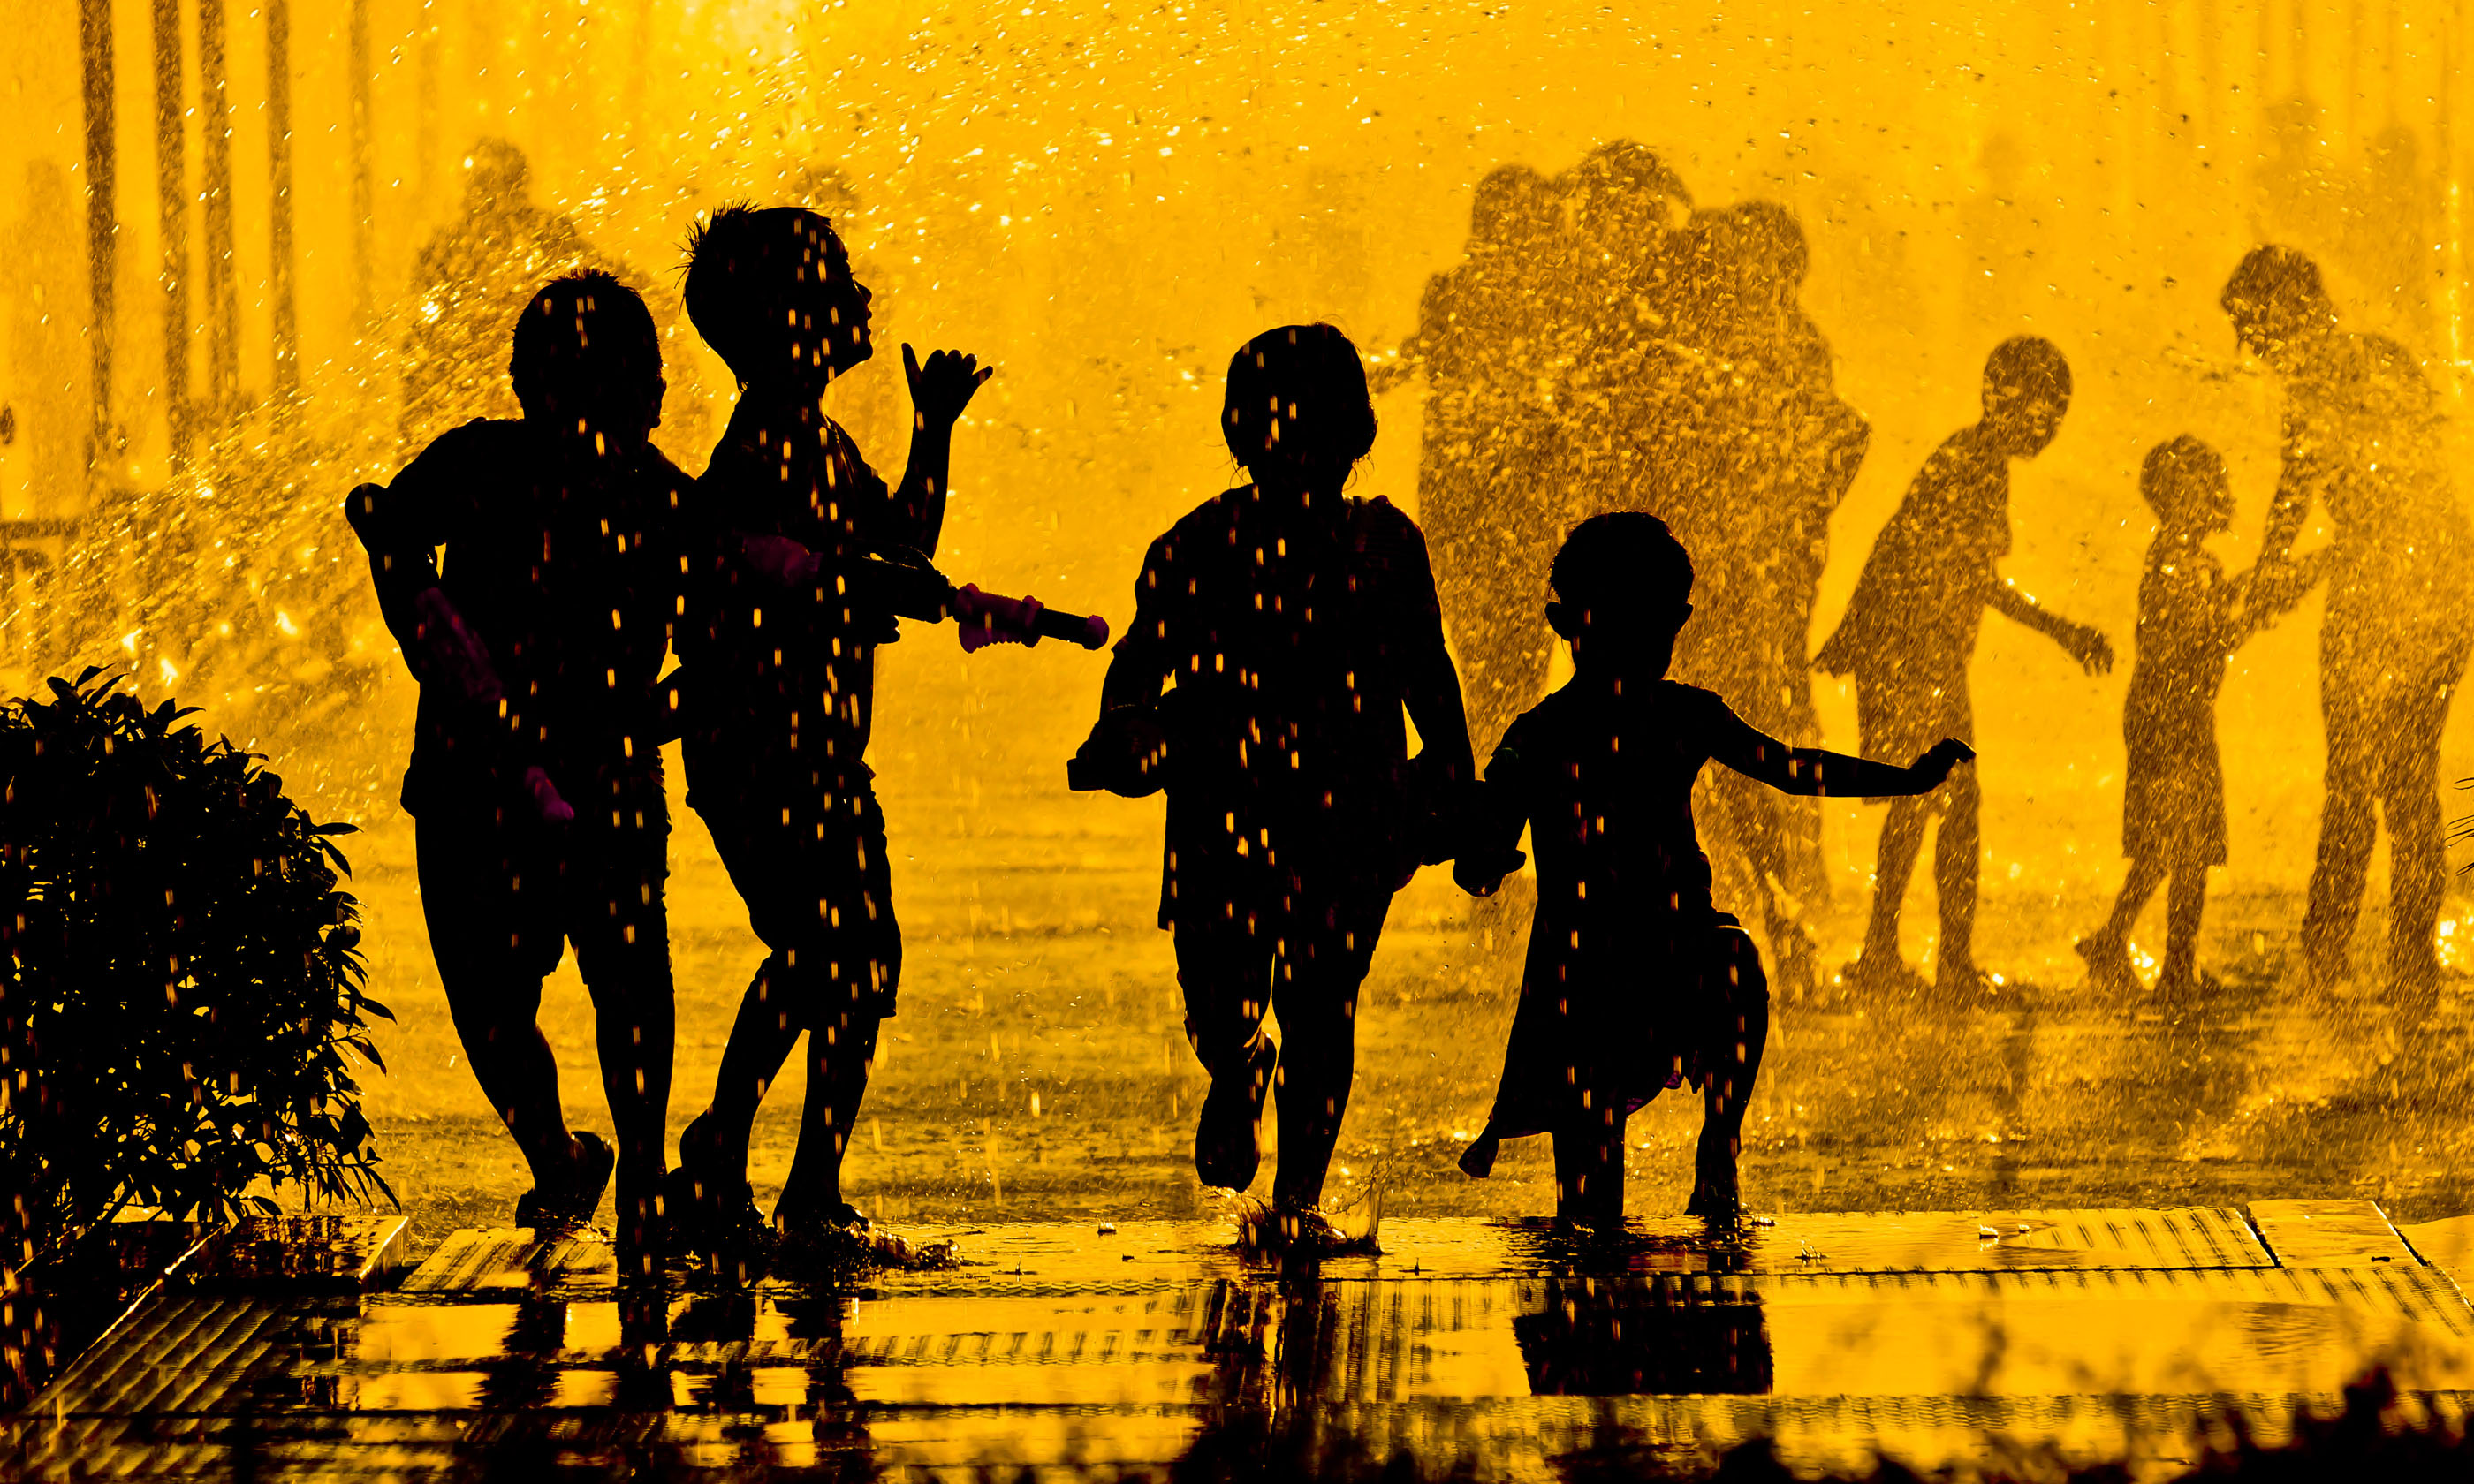 Children celebrating Songkran in Thailand (Shutterstock.com. See main credit below)